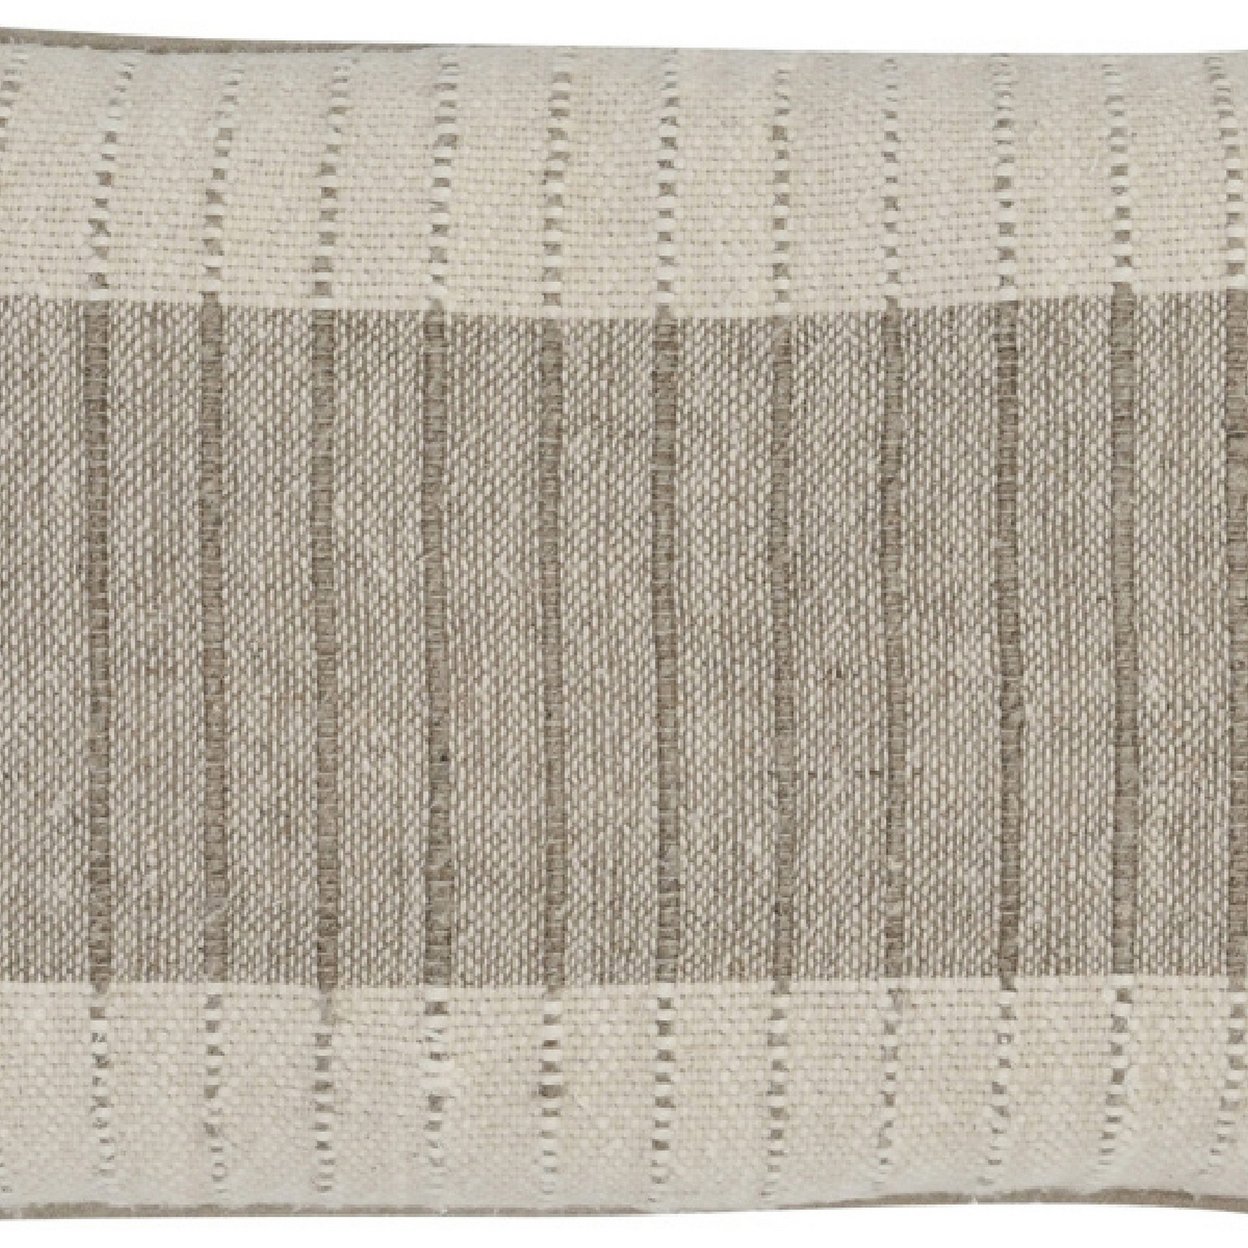 14 X 26 Lumbar Accent Throw Pillow, Yarn Dyed Woven Striped Design, Beige - Saltoro Sherpi